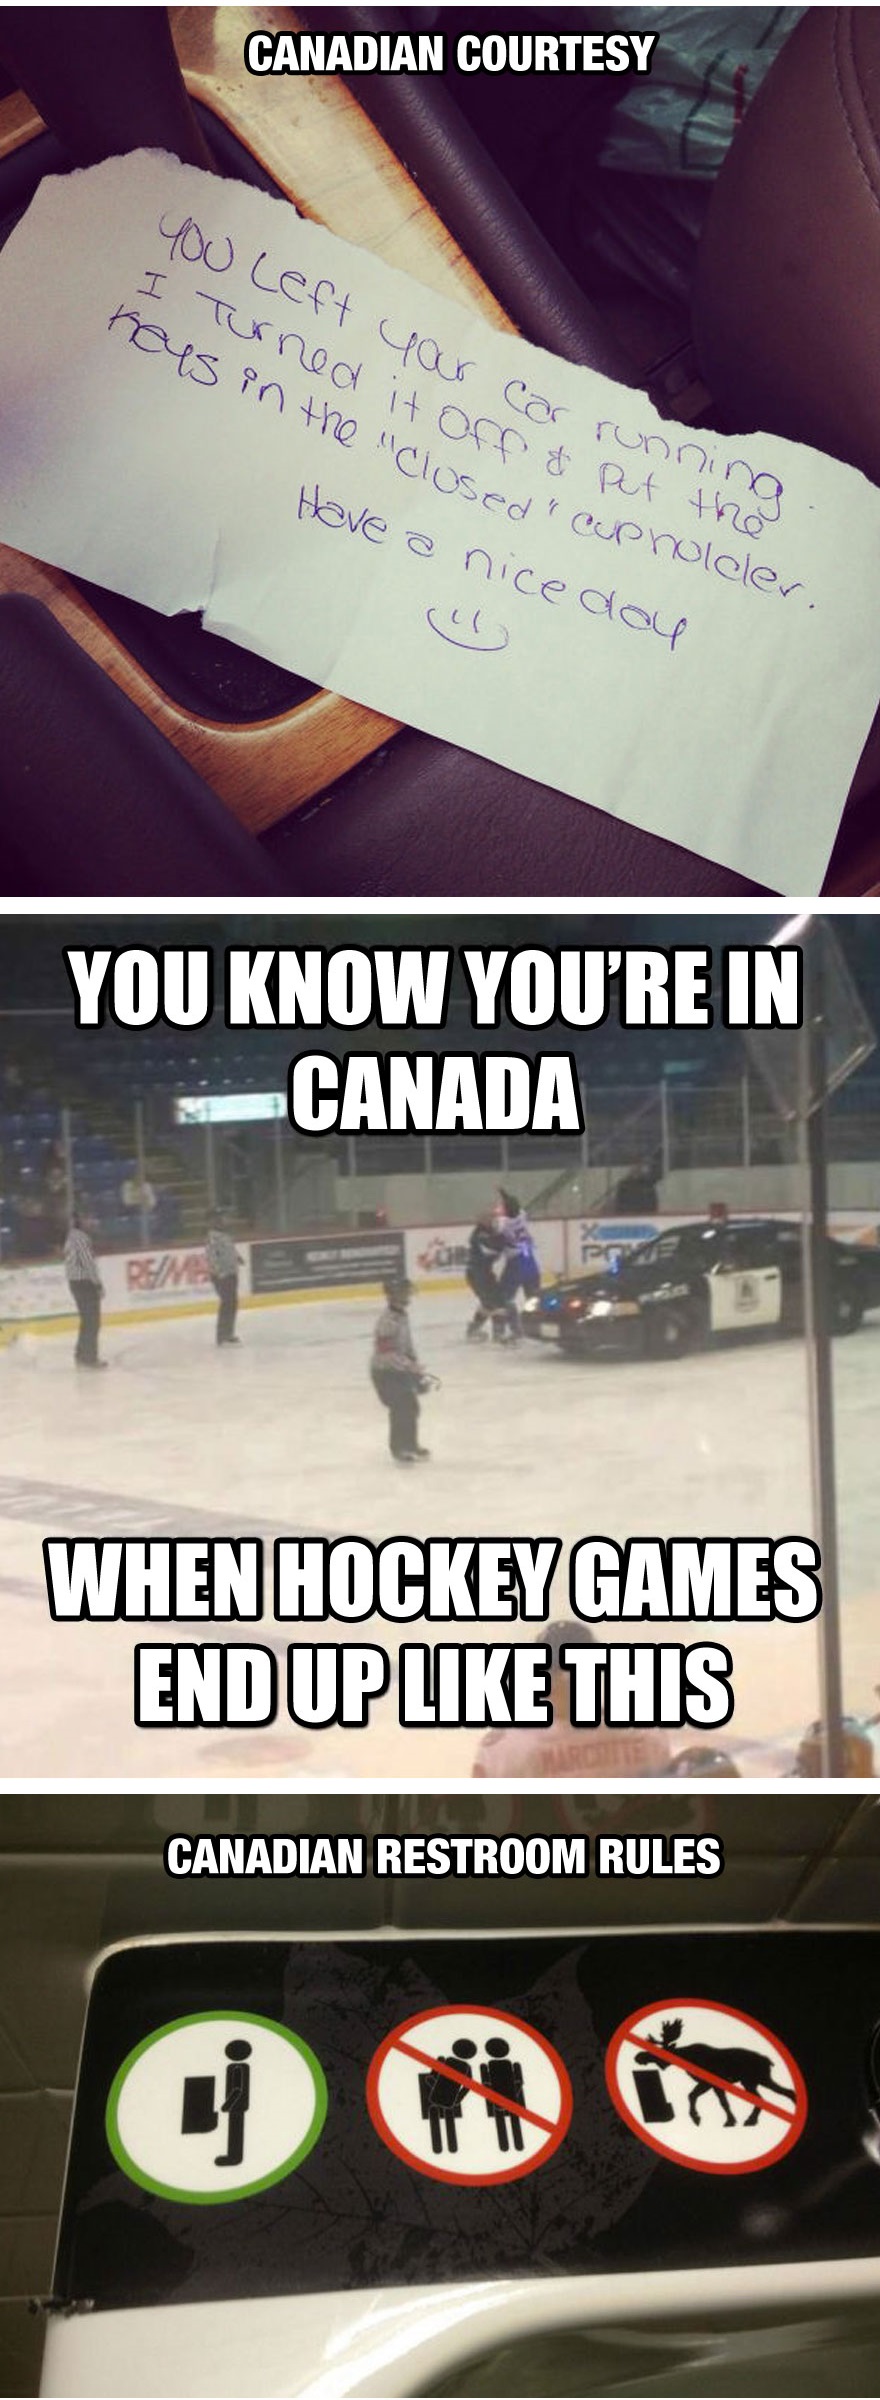 Canadian courtesy